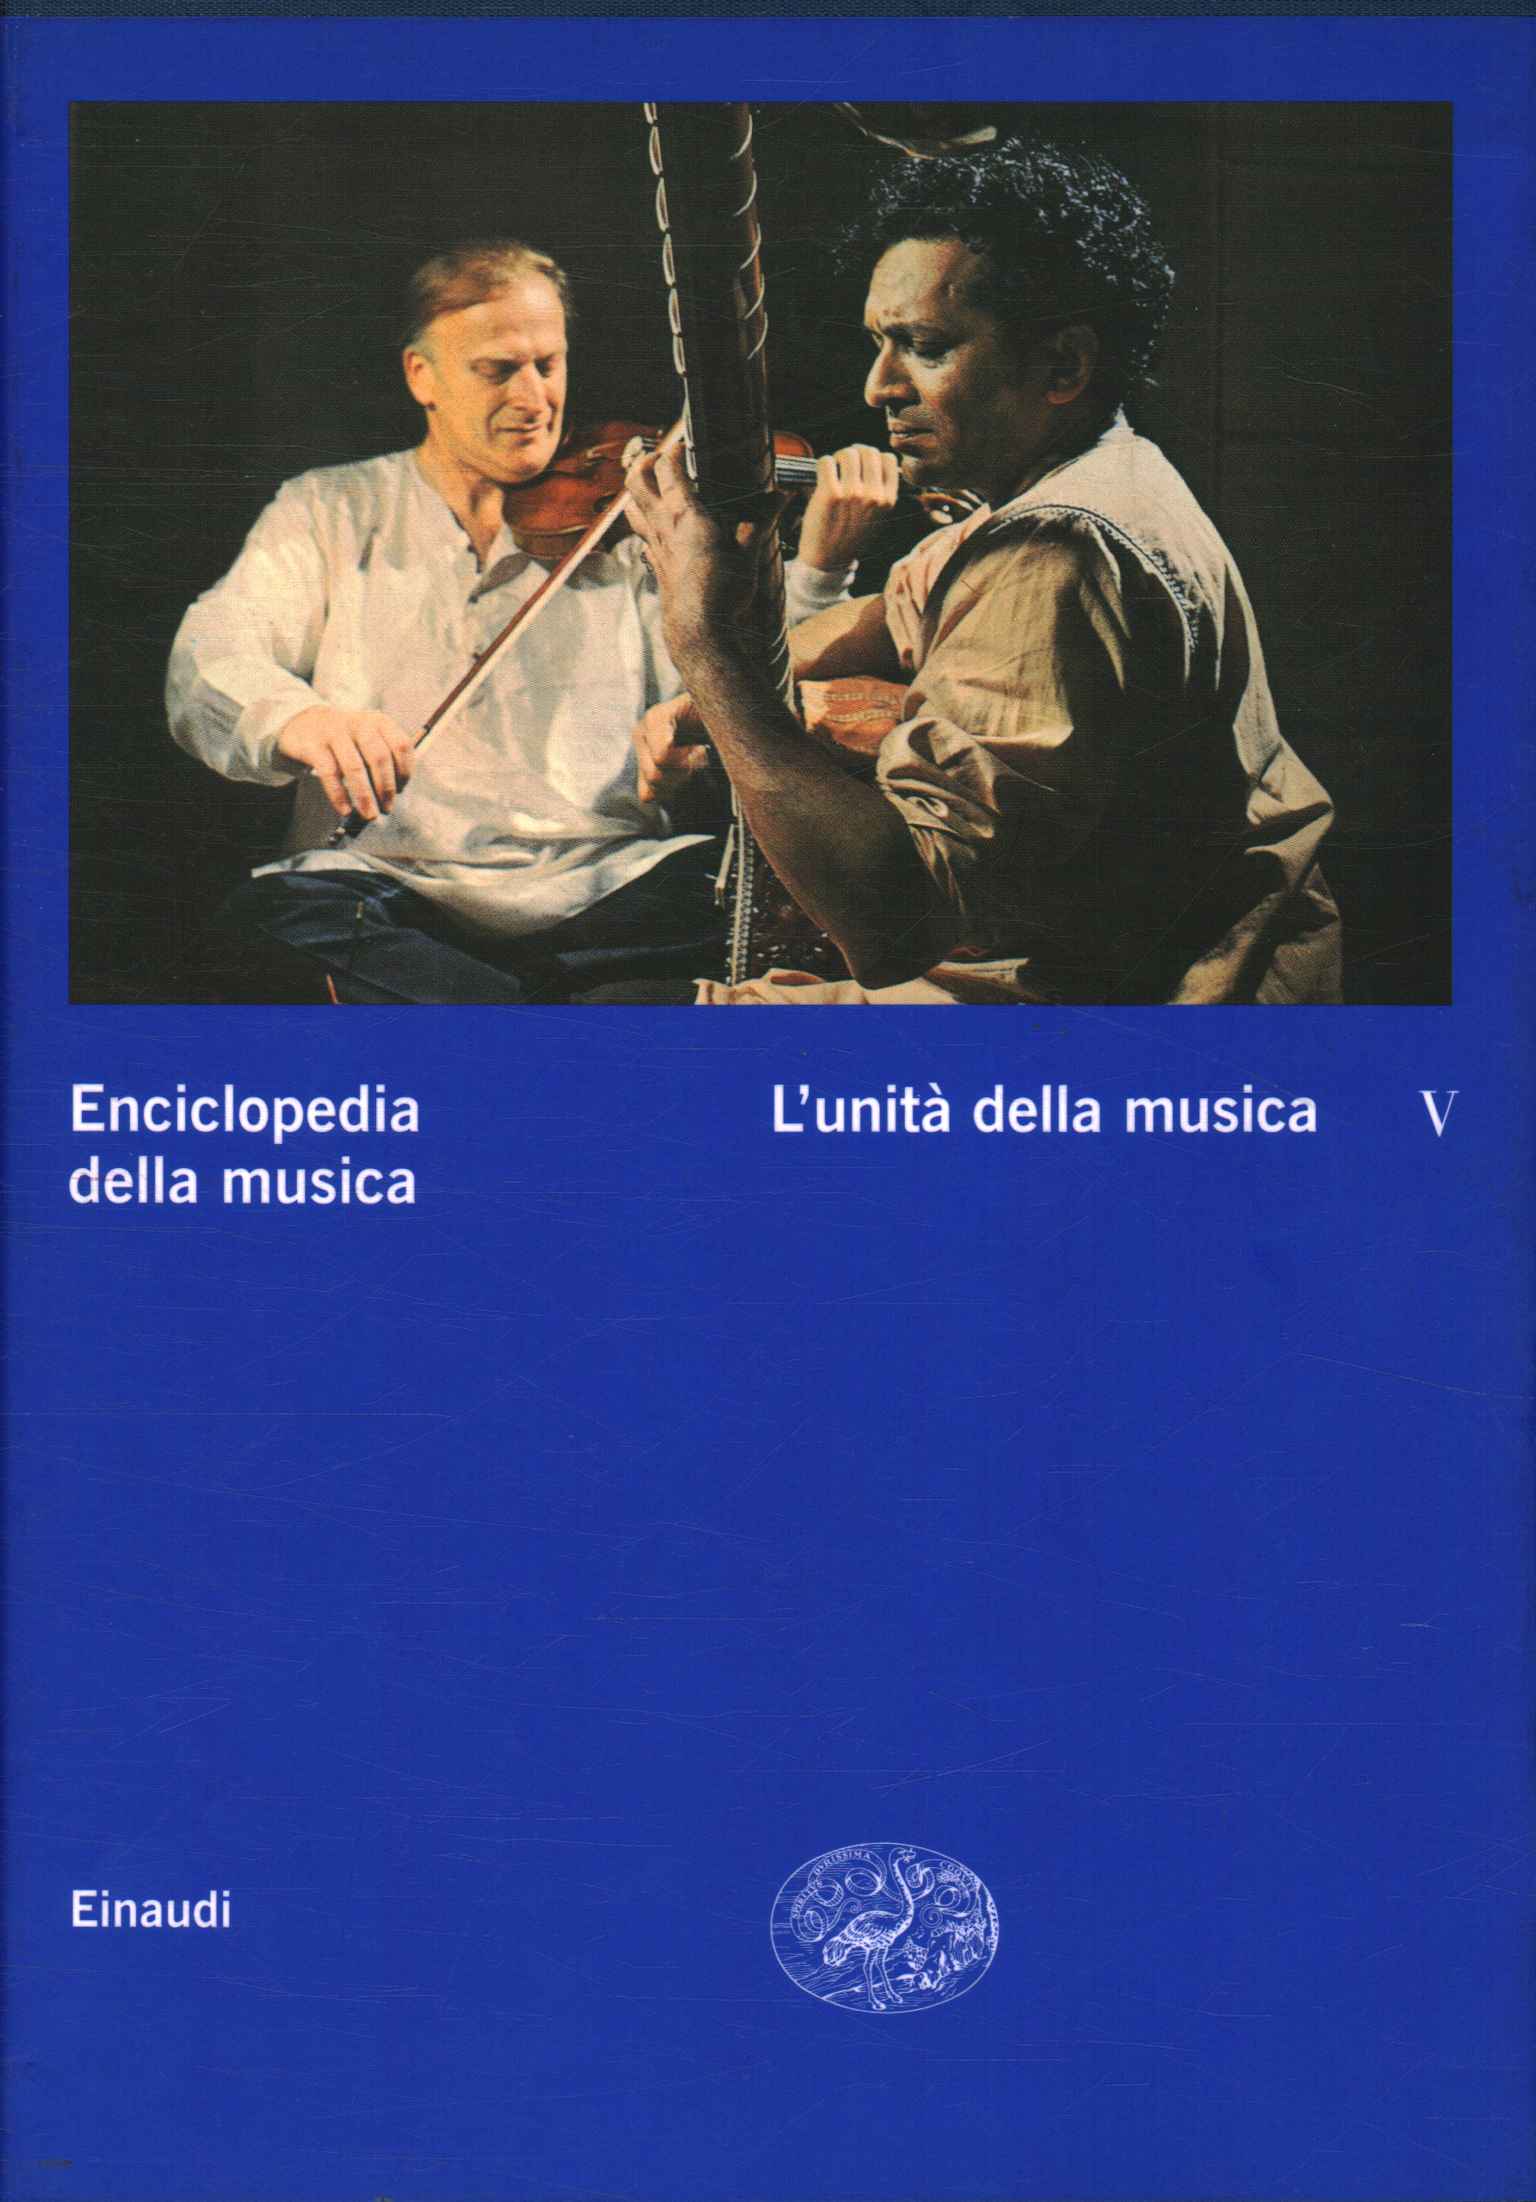 Encyclopedia of music (Volume five)